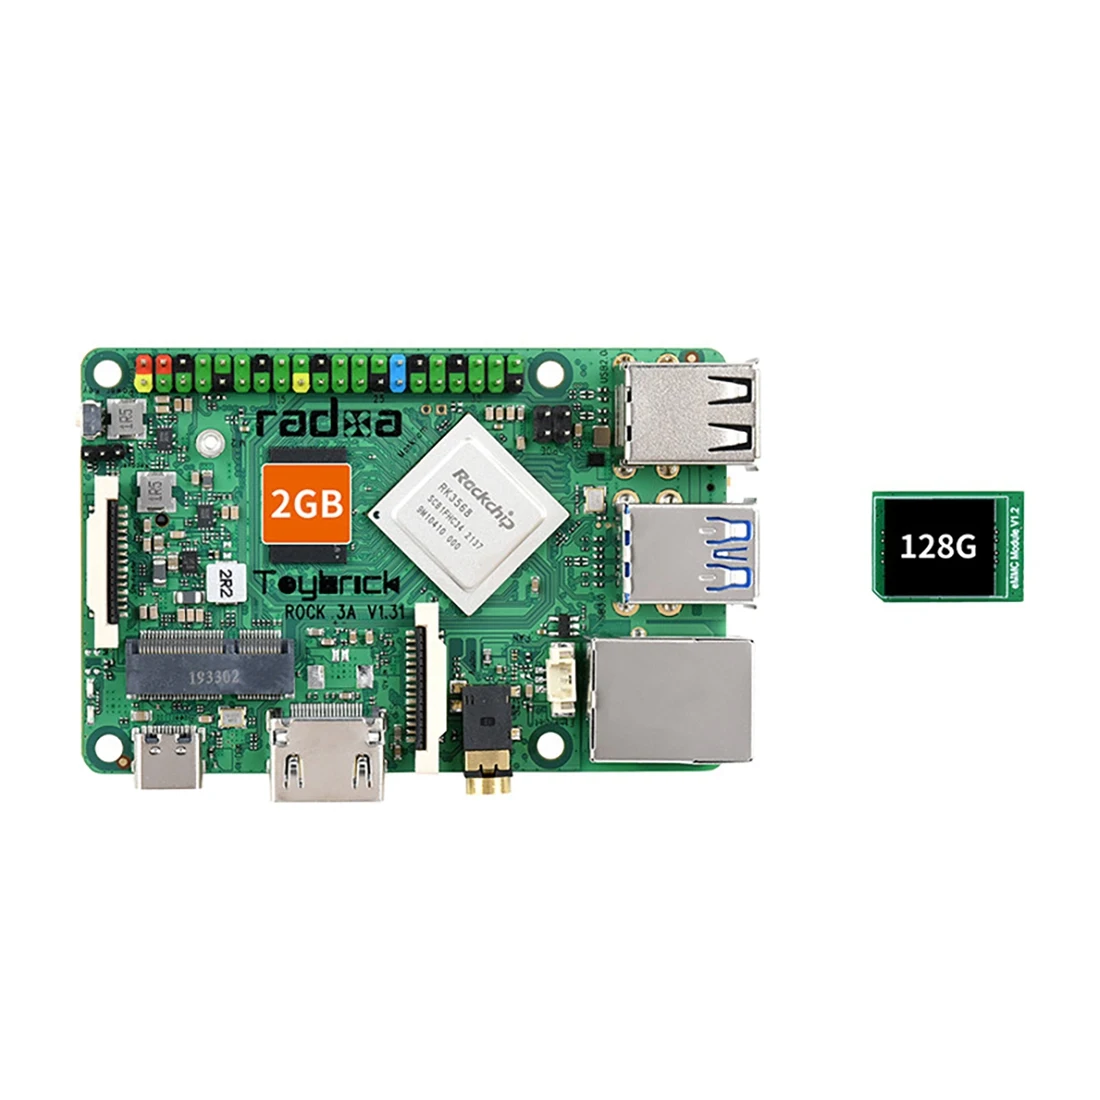 ROCK3 Model a Card Computer SBC Motherboard Module Based on RK3568 Cortex-A55 2GB RAM Development Board with 128GB EMMC